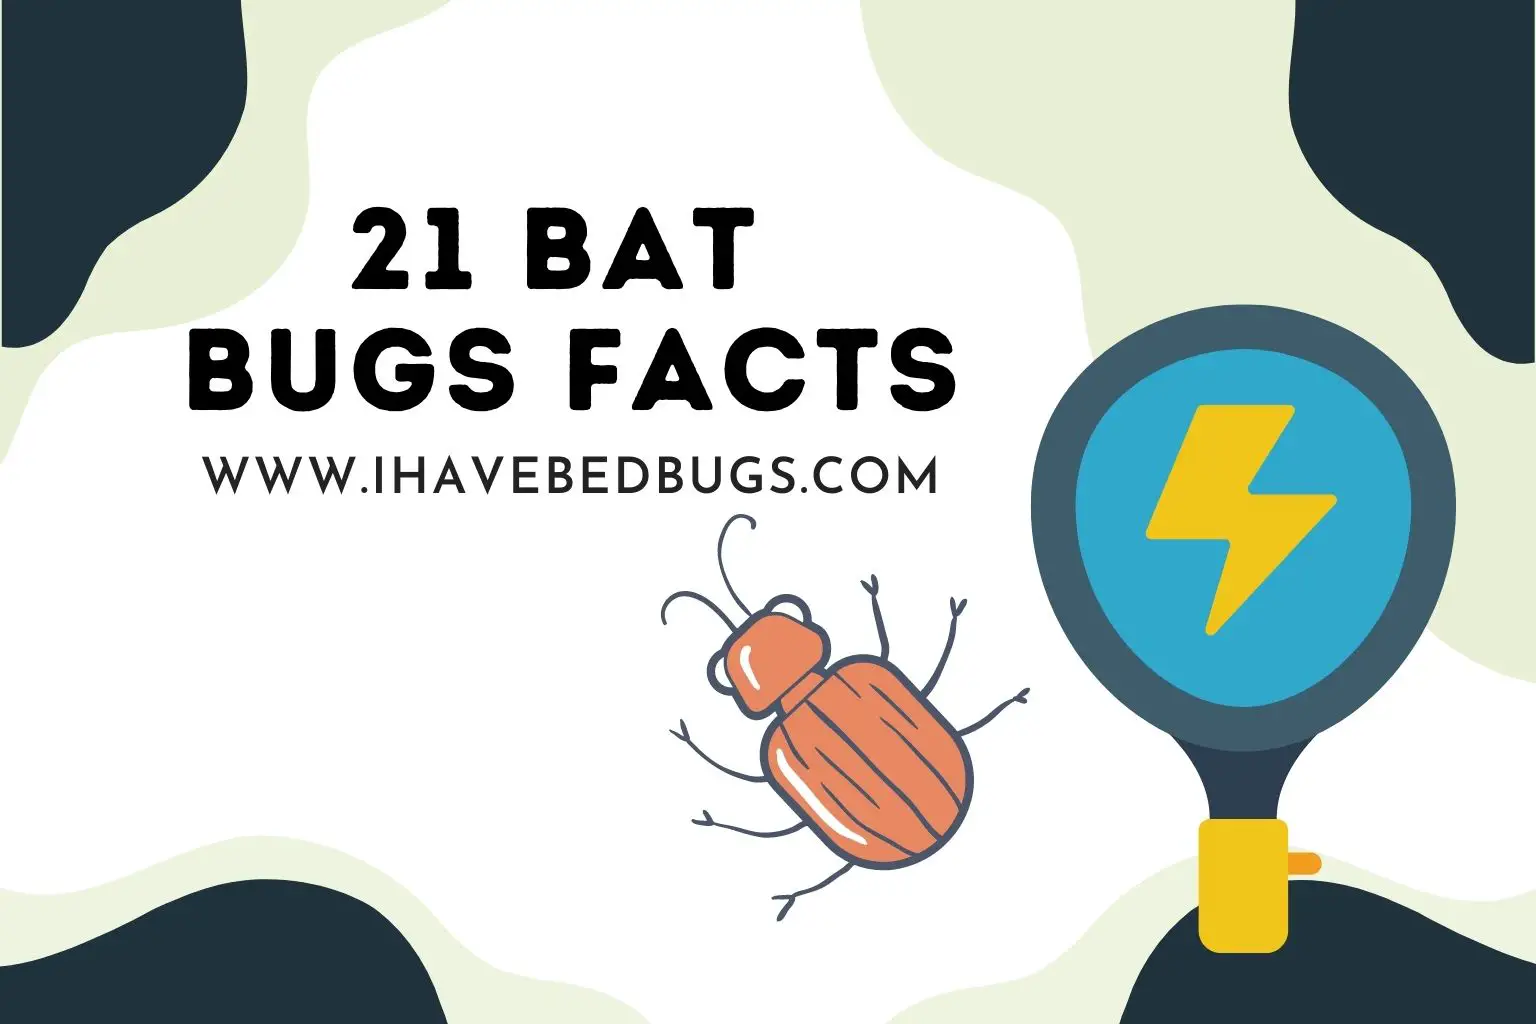 21 Bat Bugs Facts